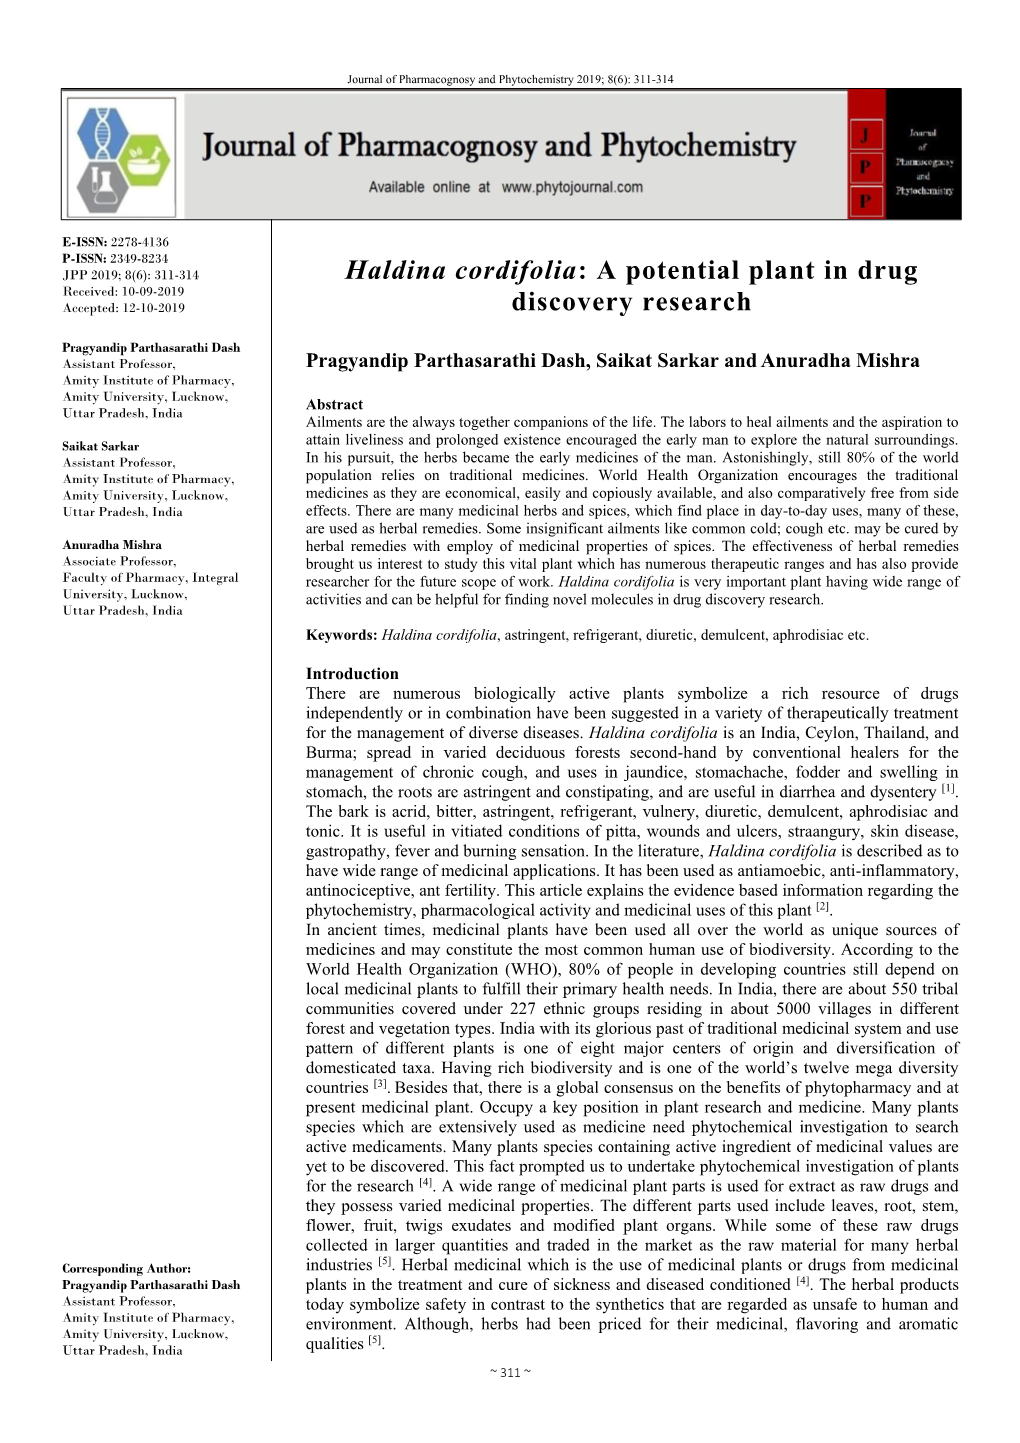 Haldina Cordifolia: a Potential Plant in Drug Discovery Research